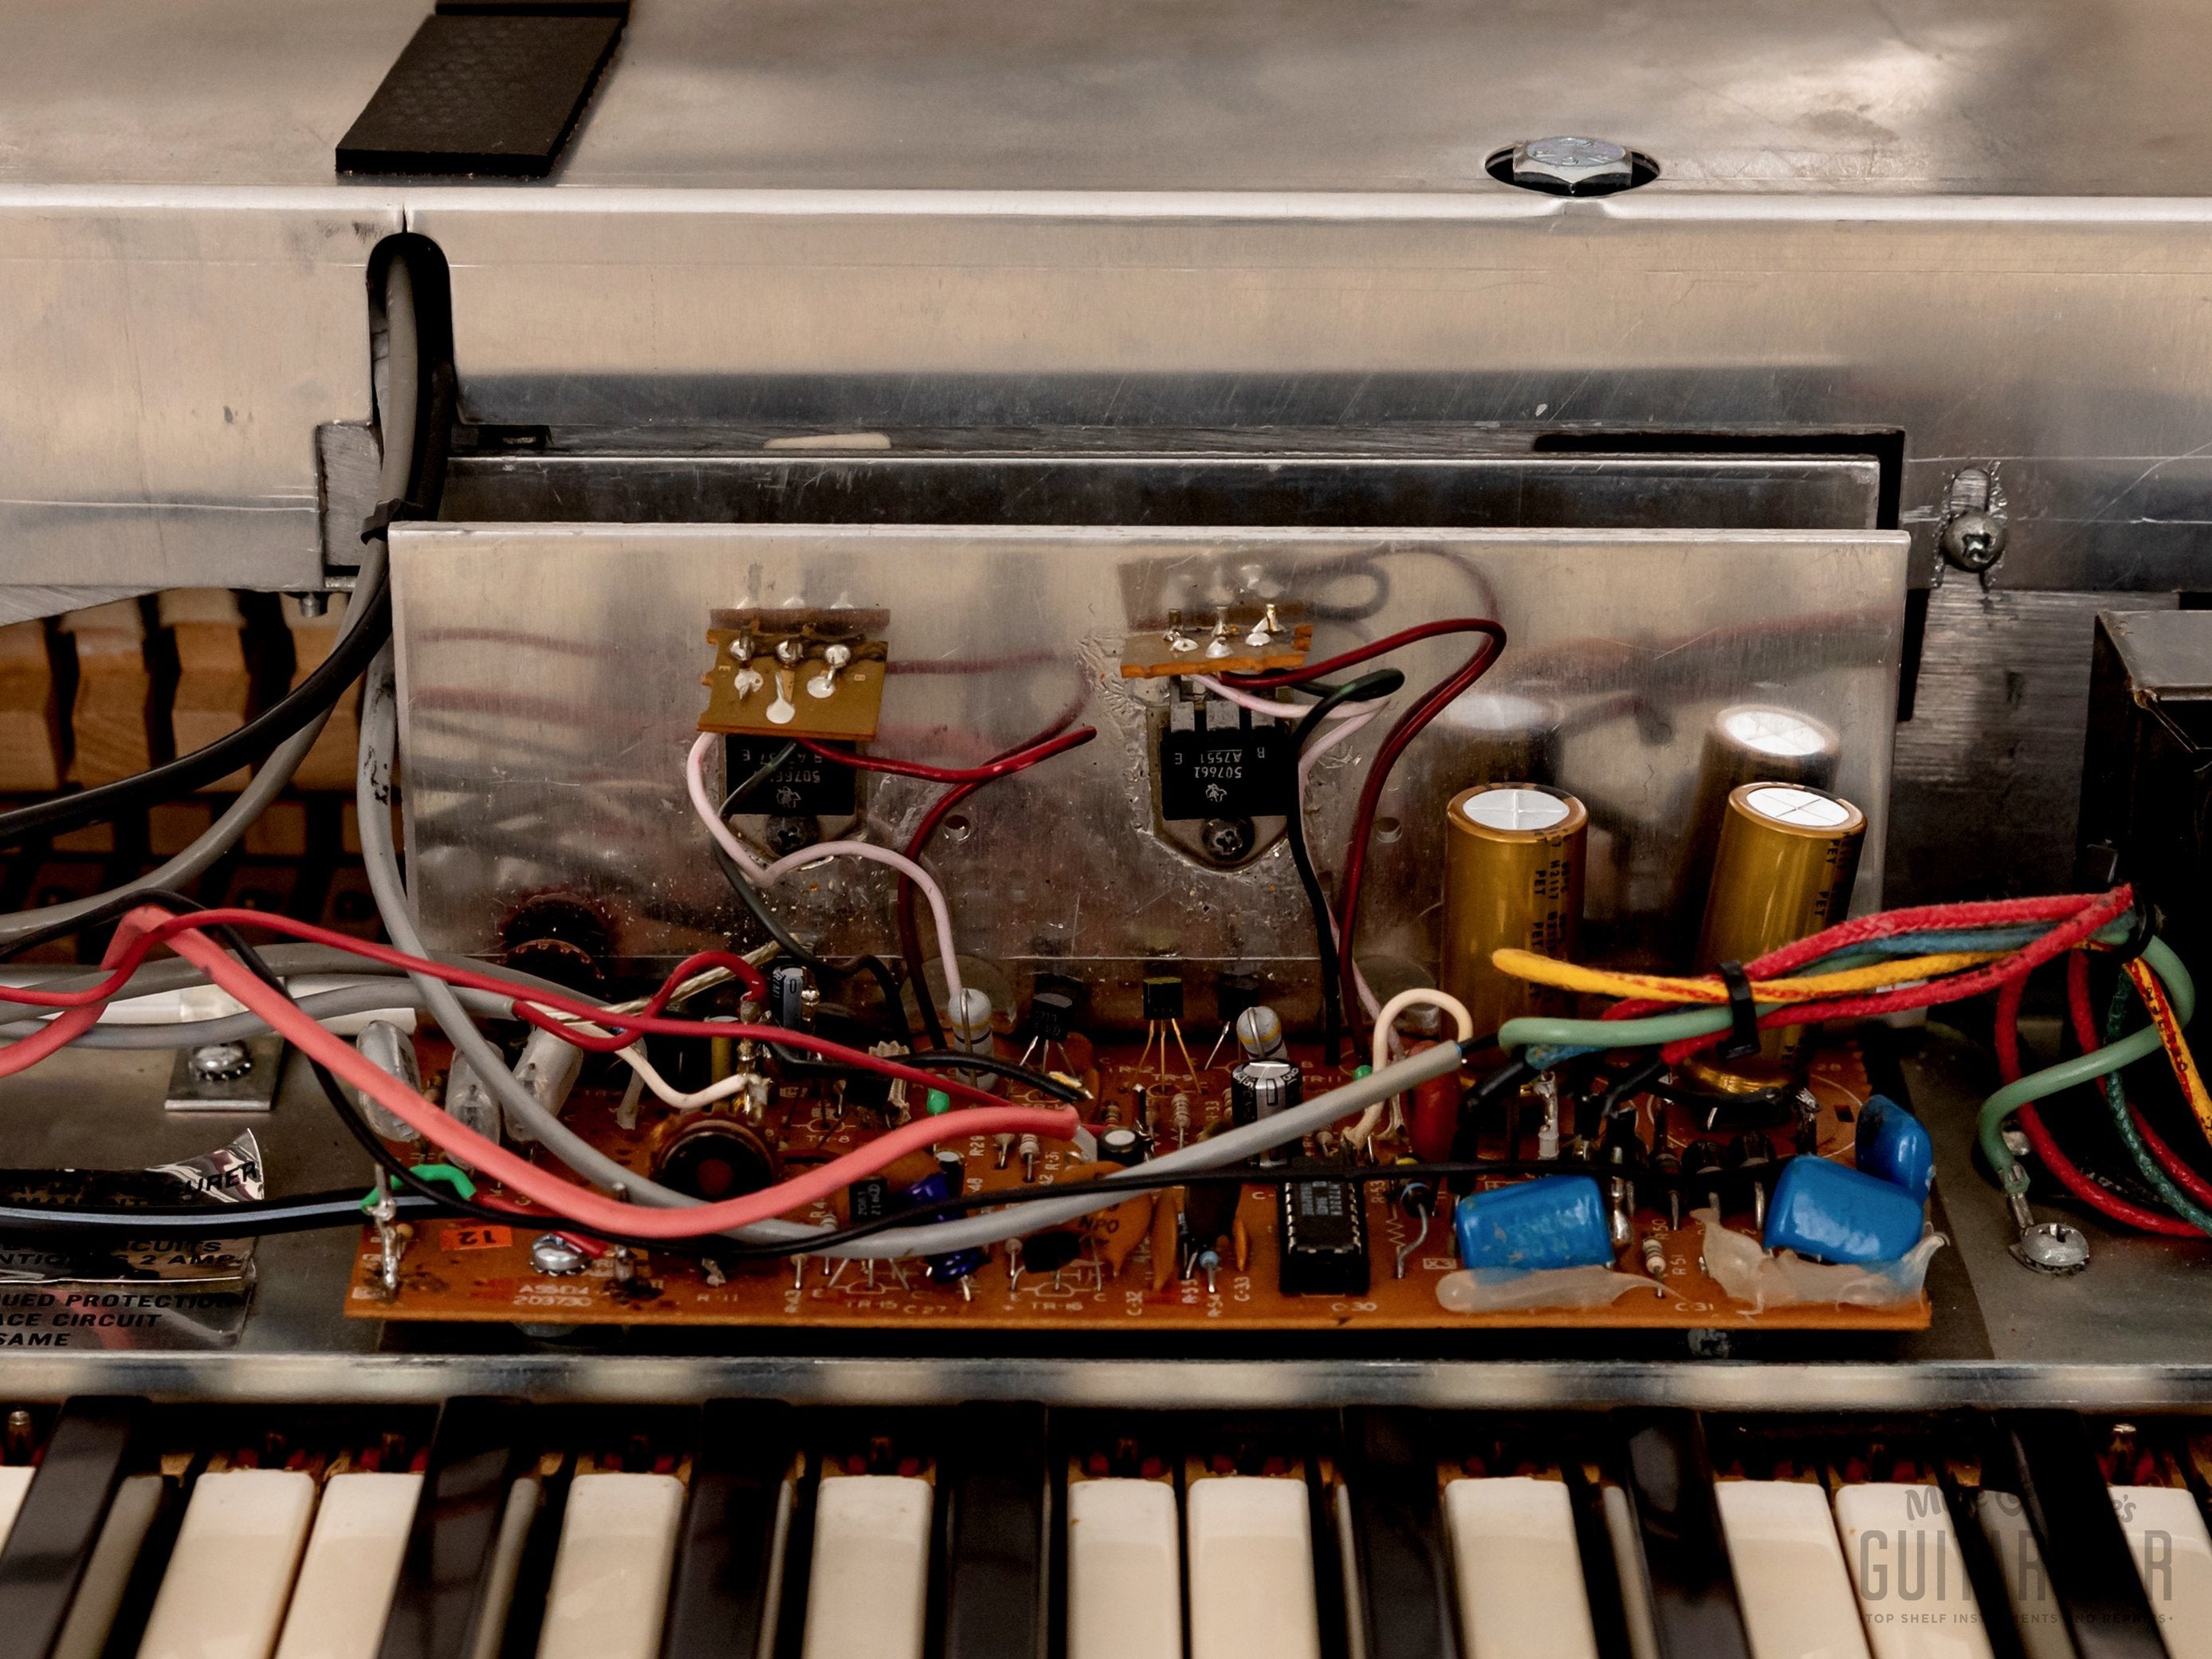 1976 Wurlitzer 200A Conversion Cream Top Vintage Electric Piano, Fully Serviced 206A